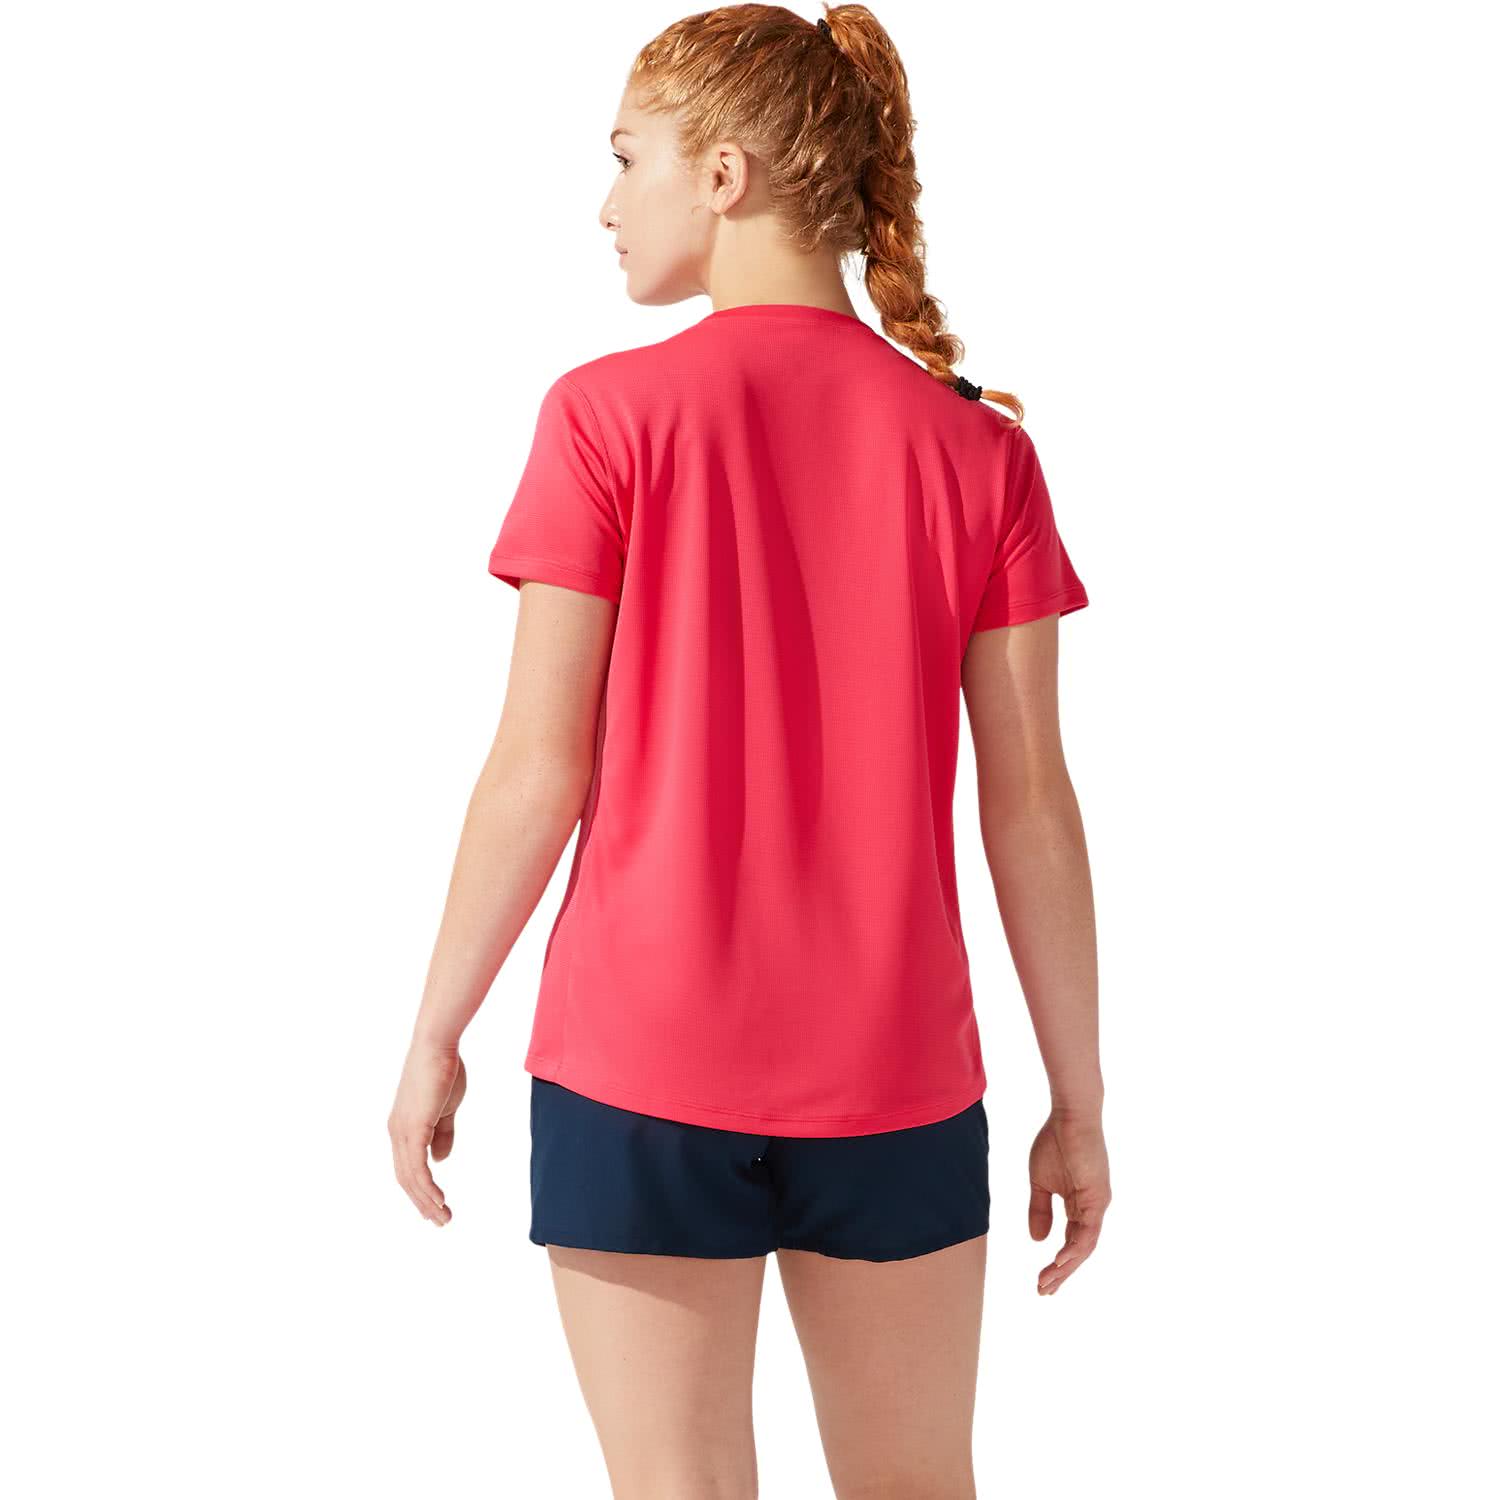 Asics Damen Laufshirt Core SS Top 2012C335 | eBay | Sportshirts